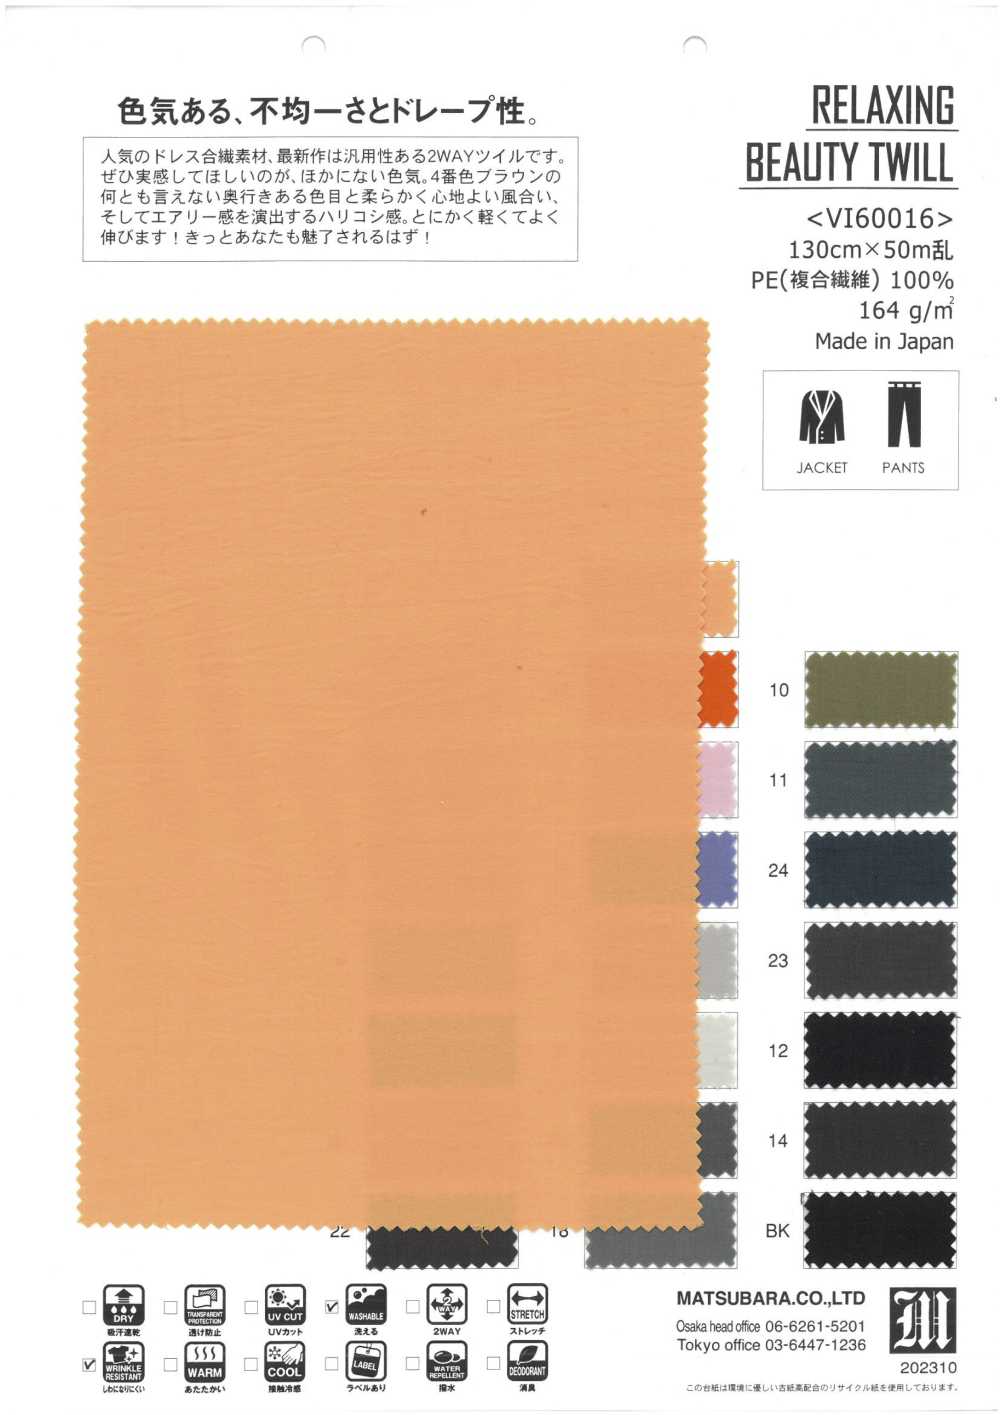 VI60016 SARJA DE BELEZA RELAXANTE[Têxtil / Tecido] Matsubara